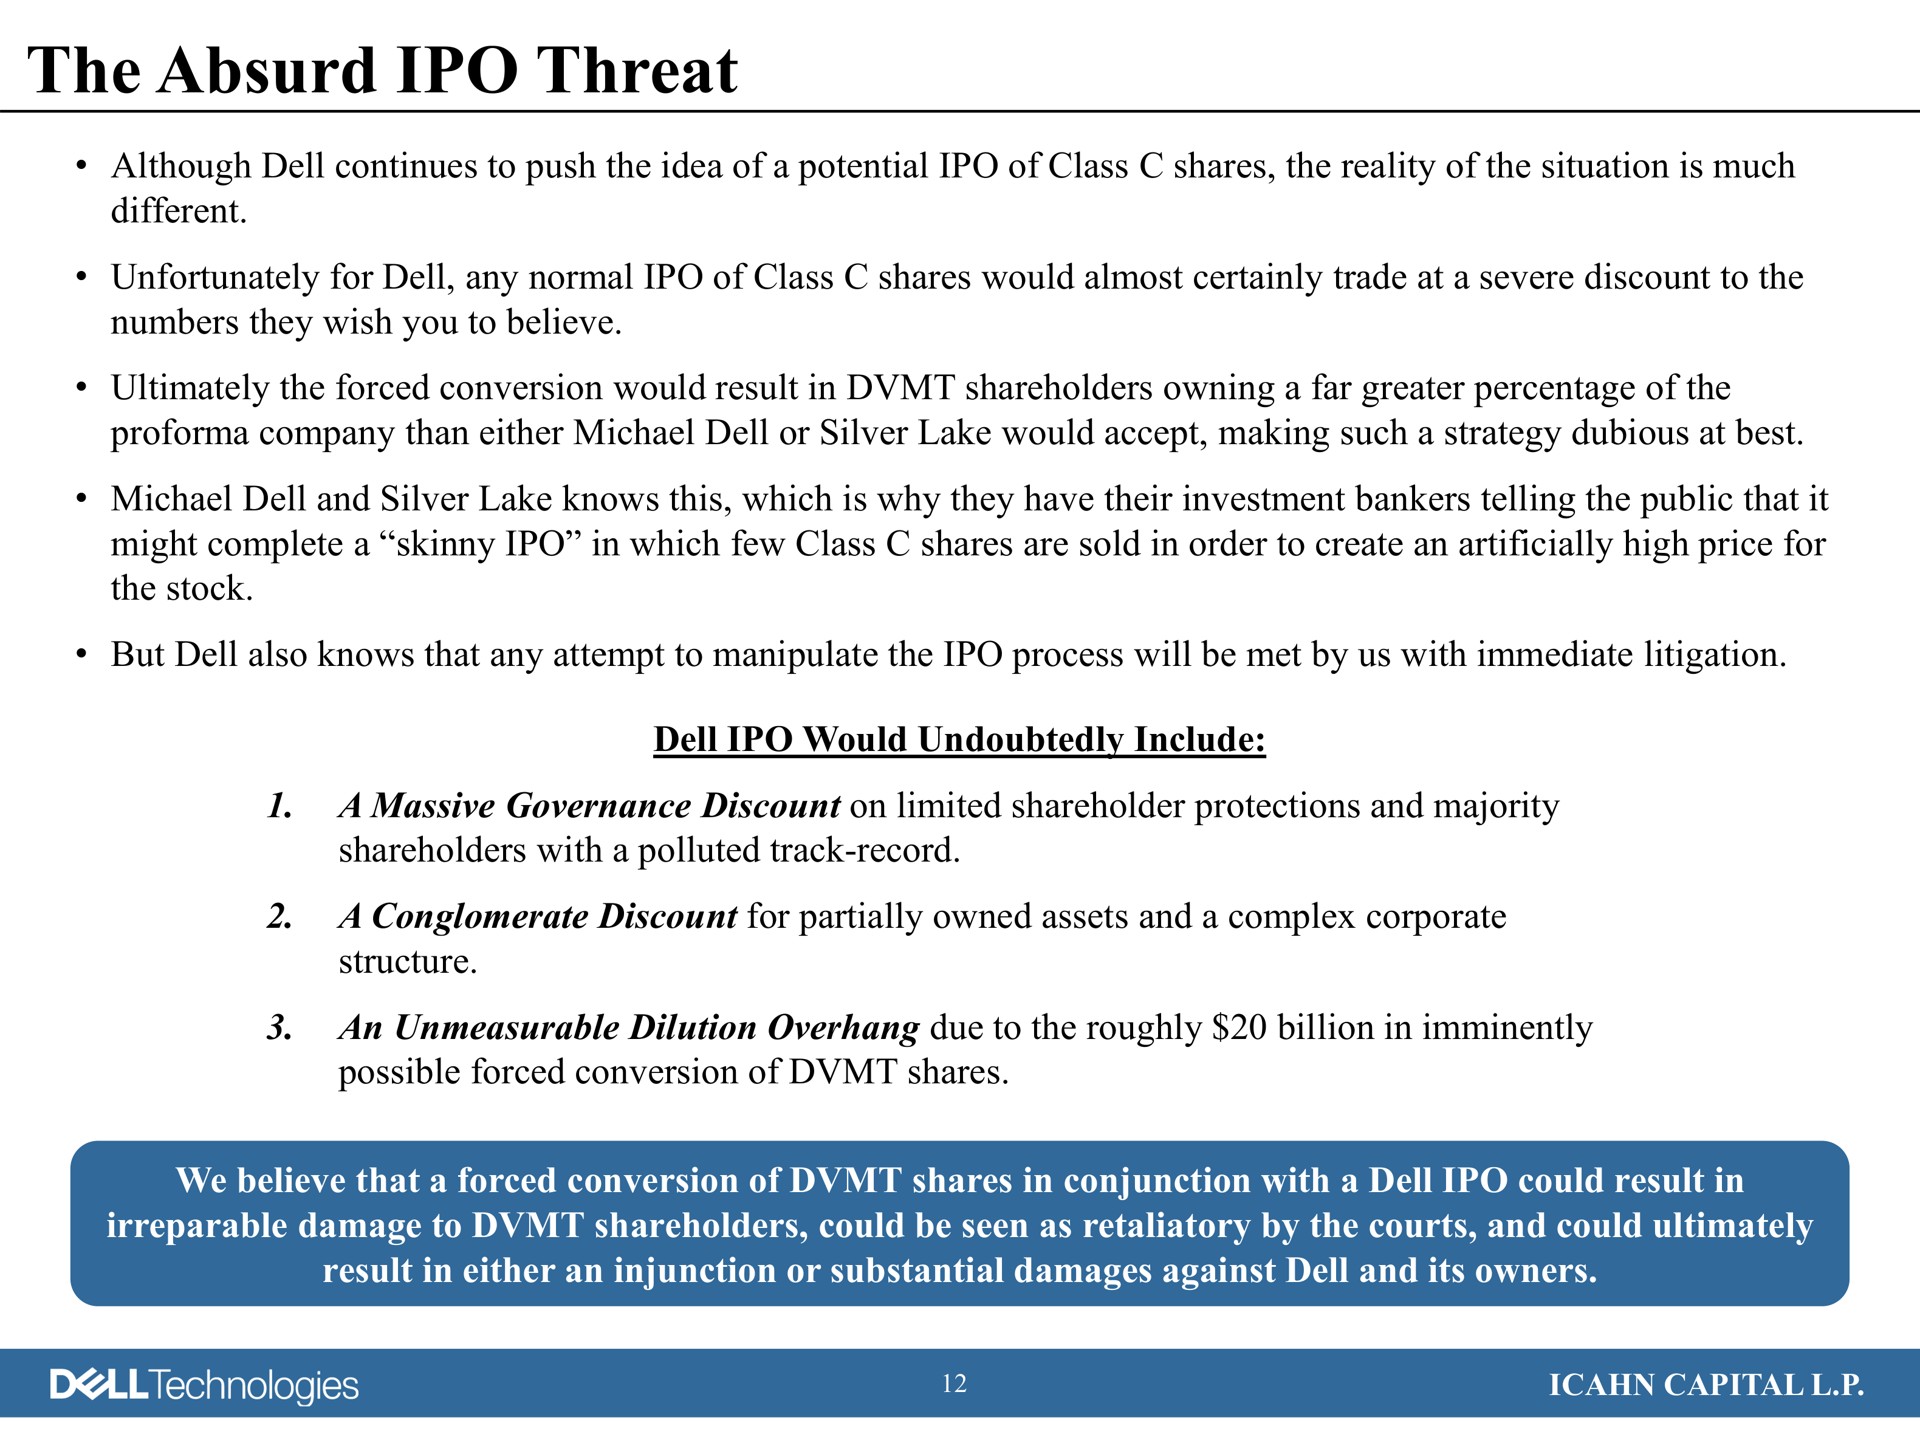 the absurd threat capital technologies | Icahn Enterprises